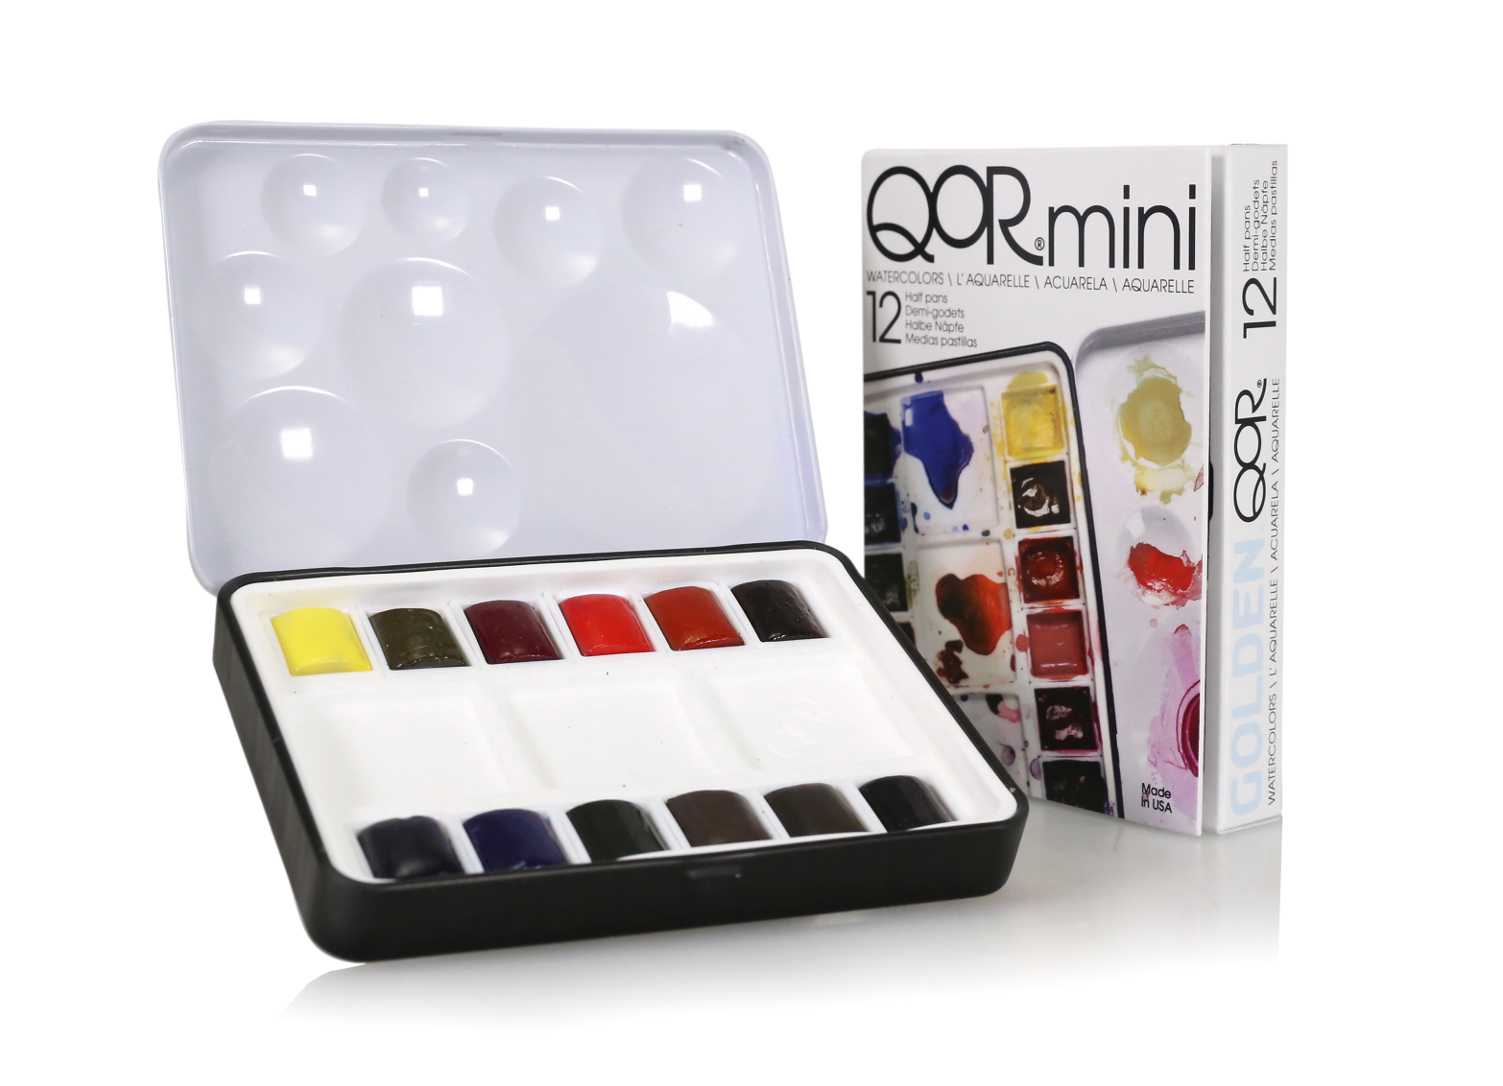 GOLDEN Introduces New QoR® mini and QoR Masking Fluid